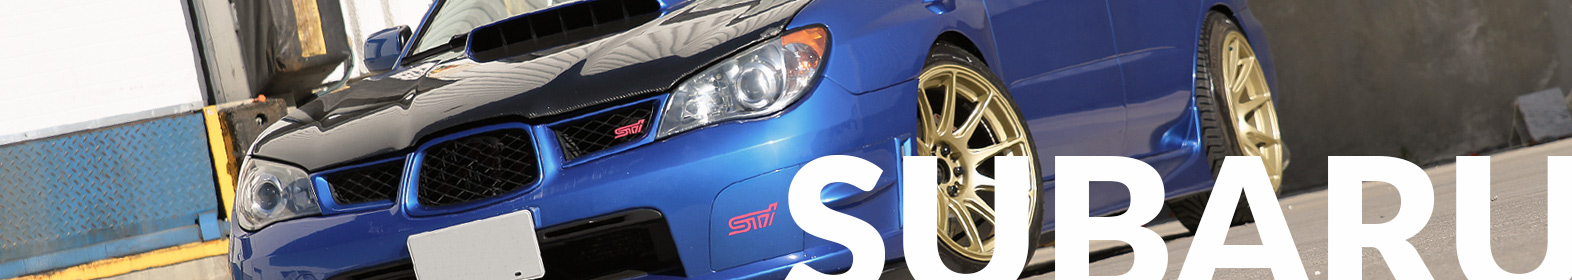 Subaru Banner | Yates Collision